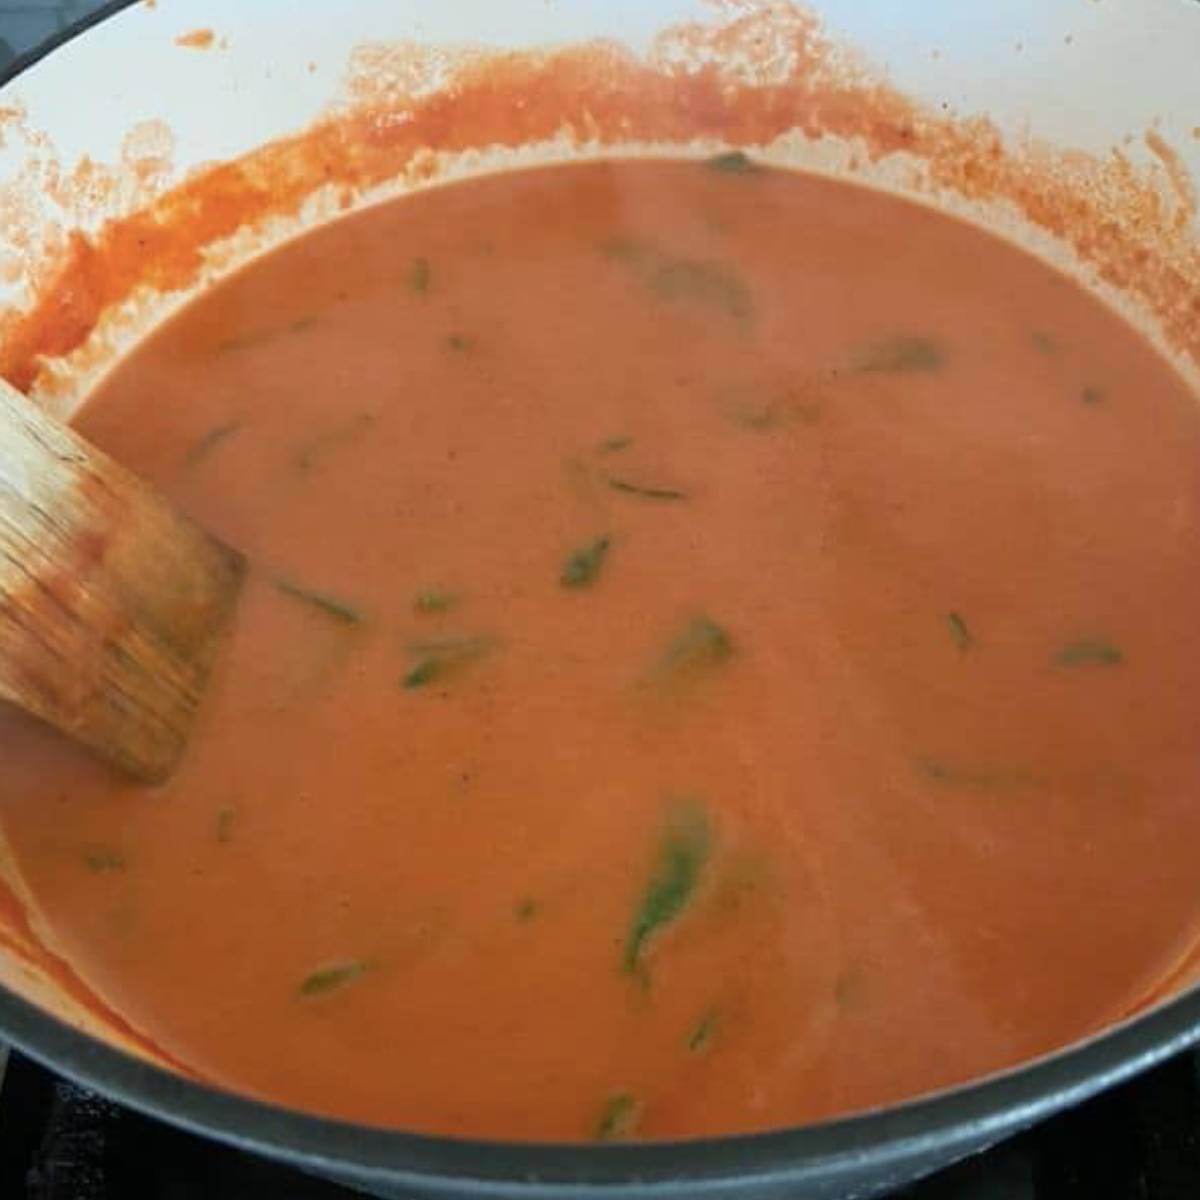 Cream and spinach in tomato soup.